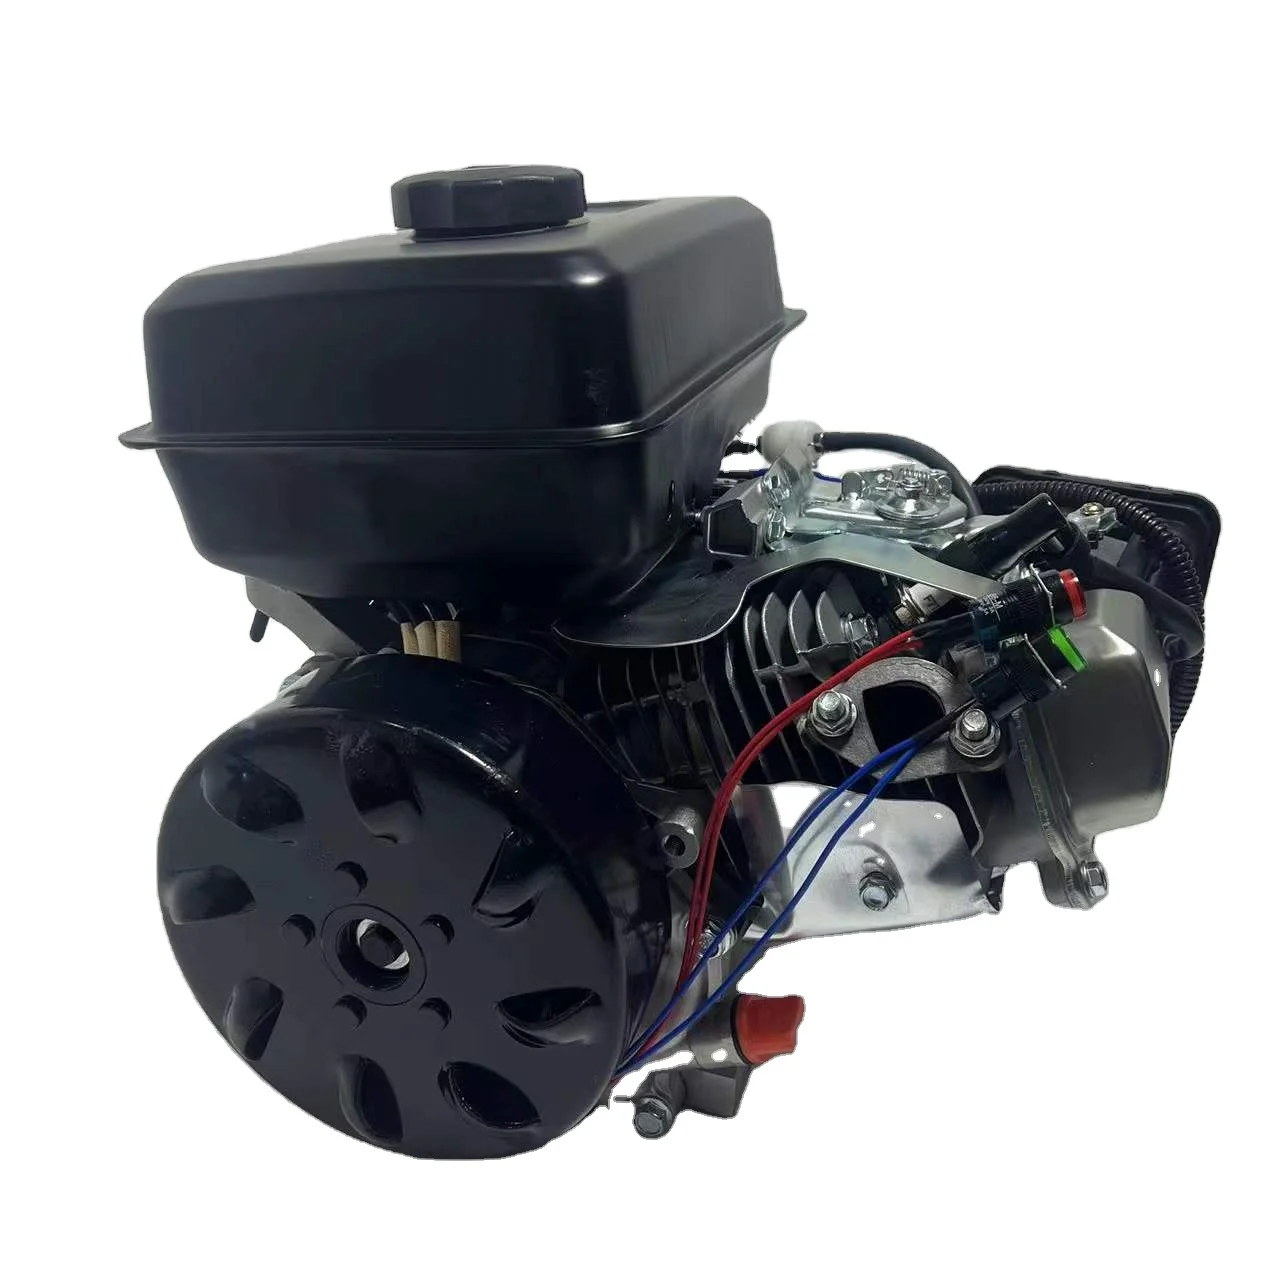 Electric car tricycle gasoline DC electric vehicle ranger 48v alternator